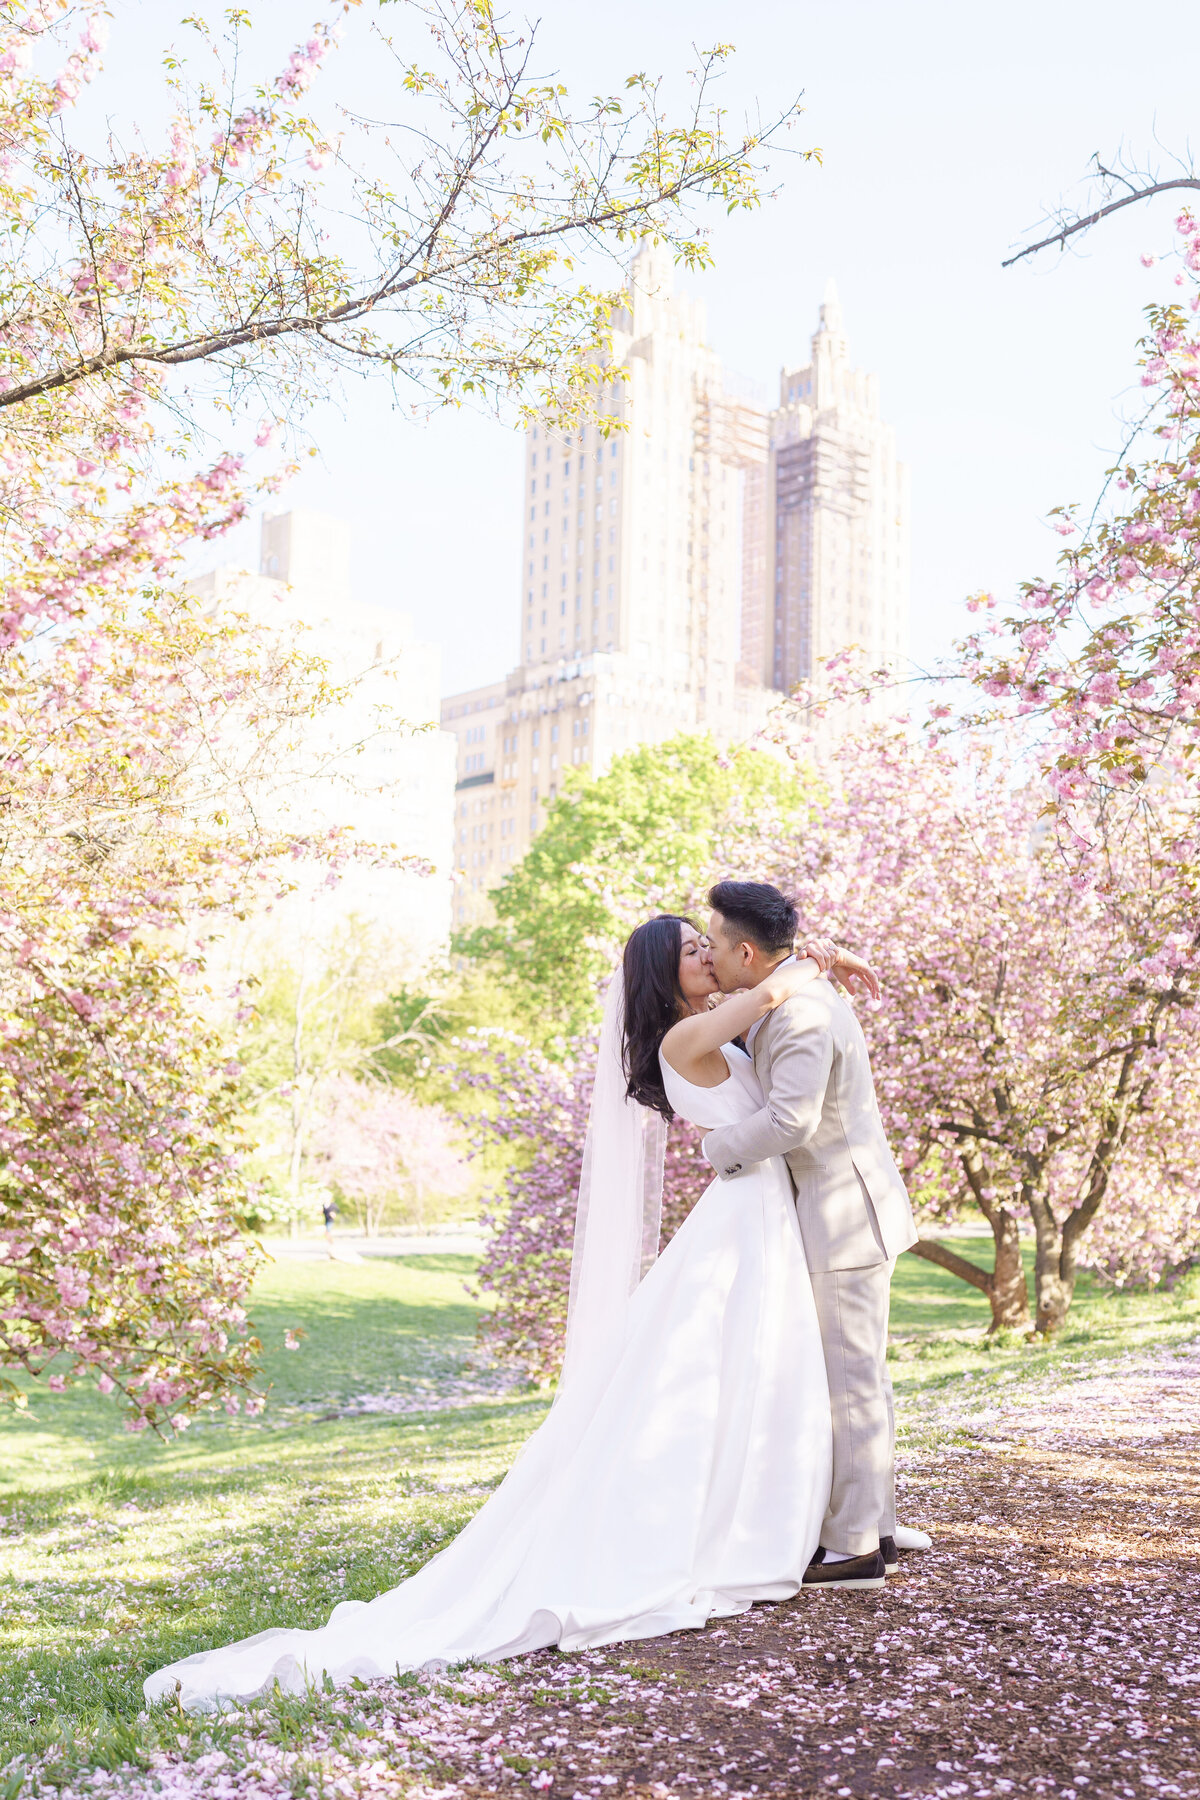 Amanda Gomez Photography - Central Park Wedding Photographer - 1